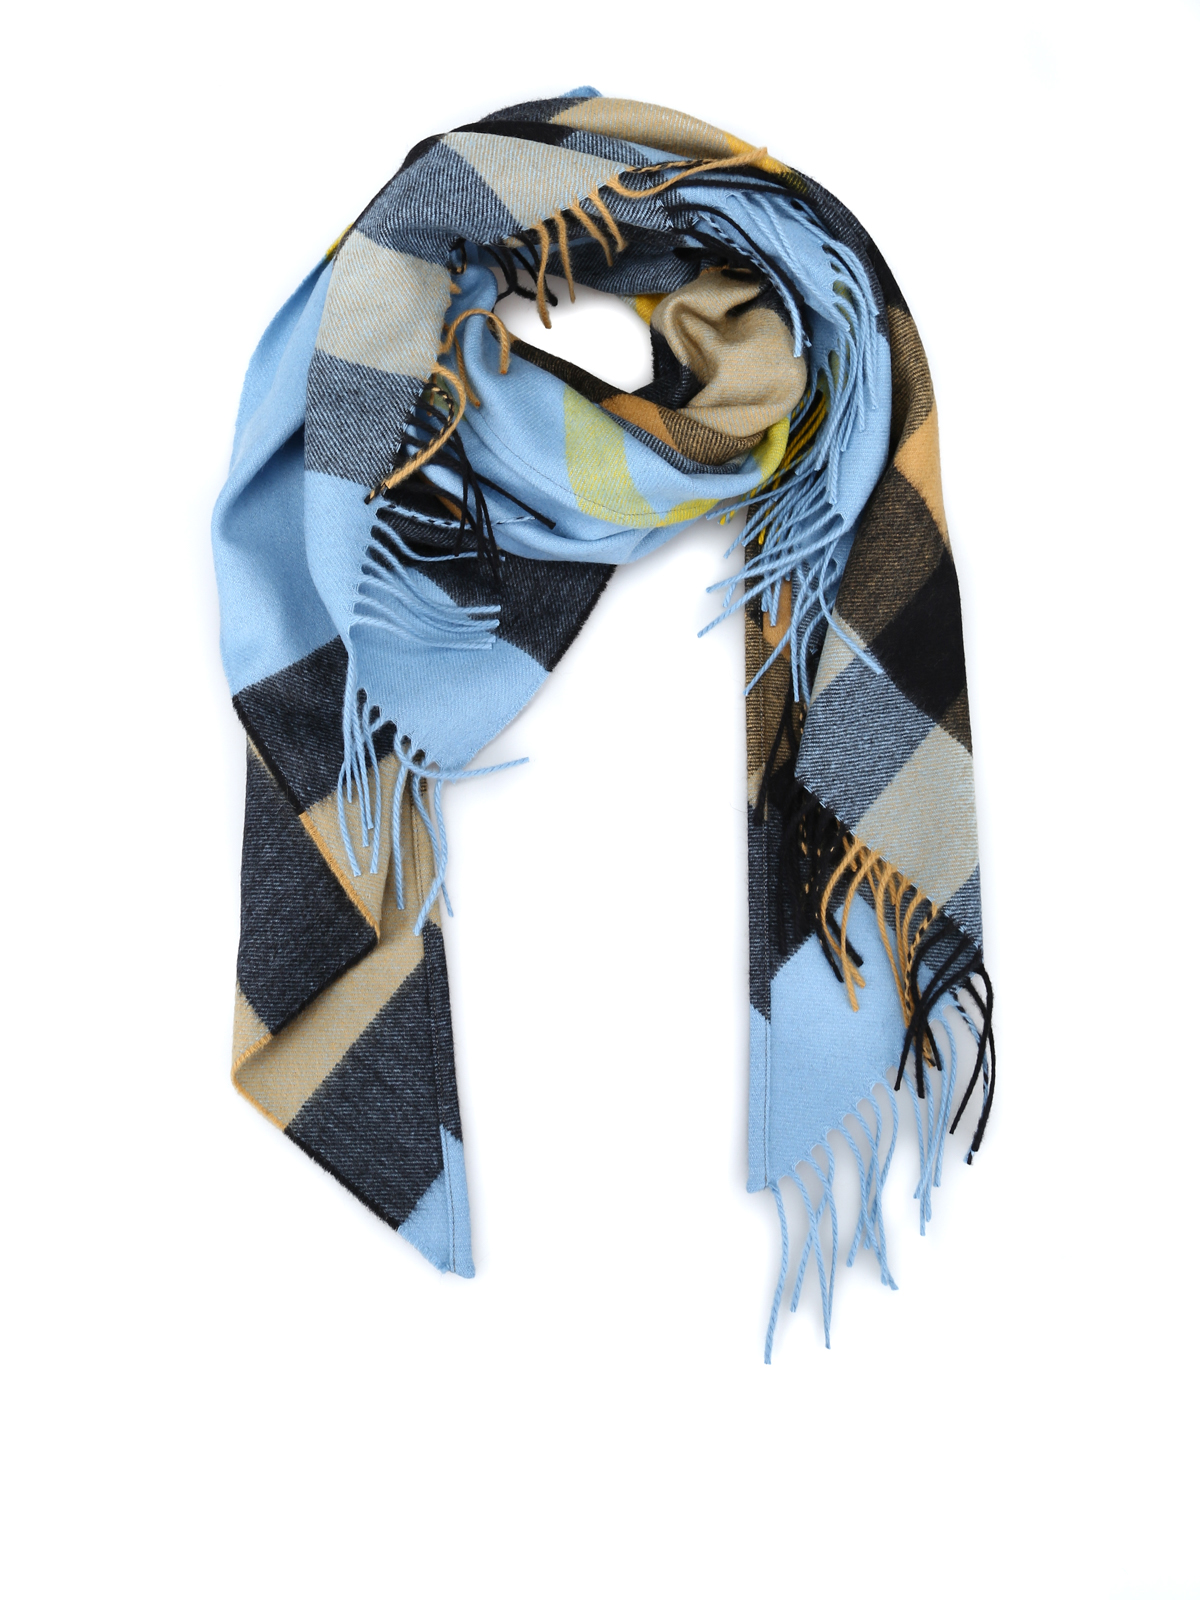 burberry scarf womens 2013